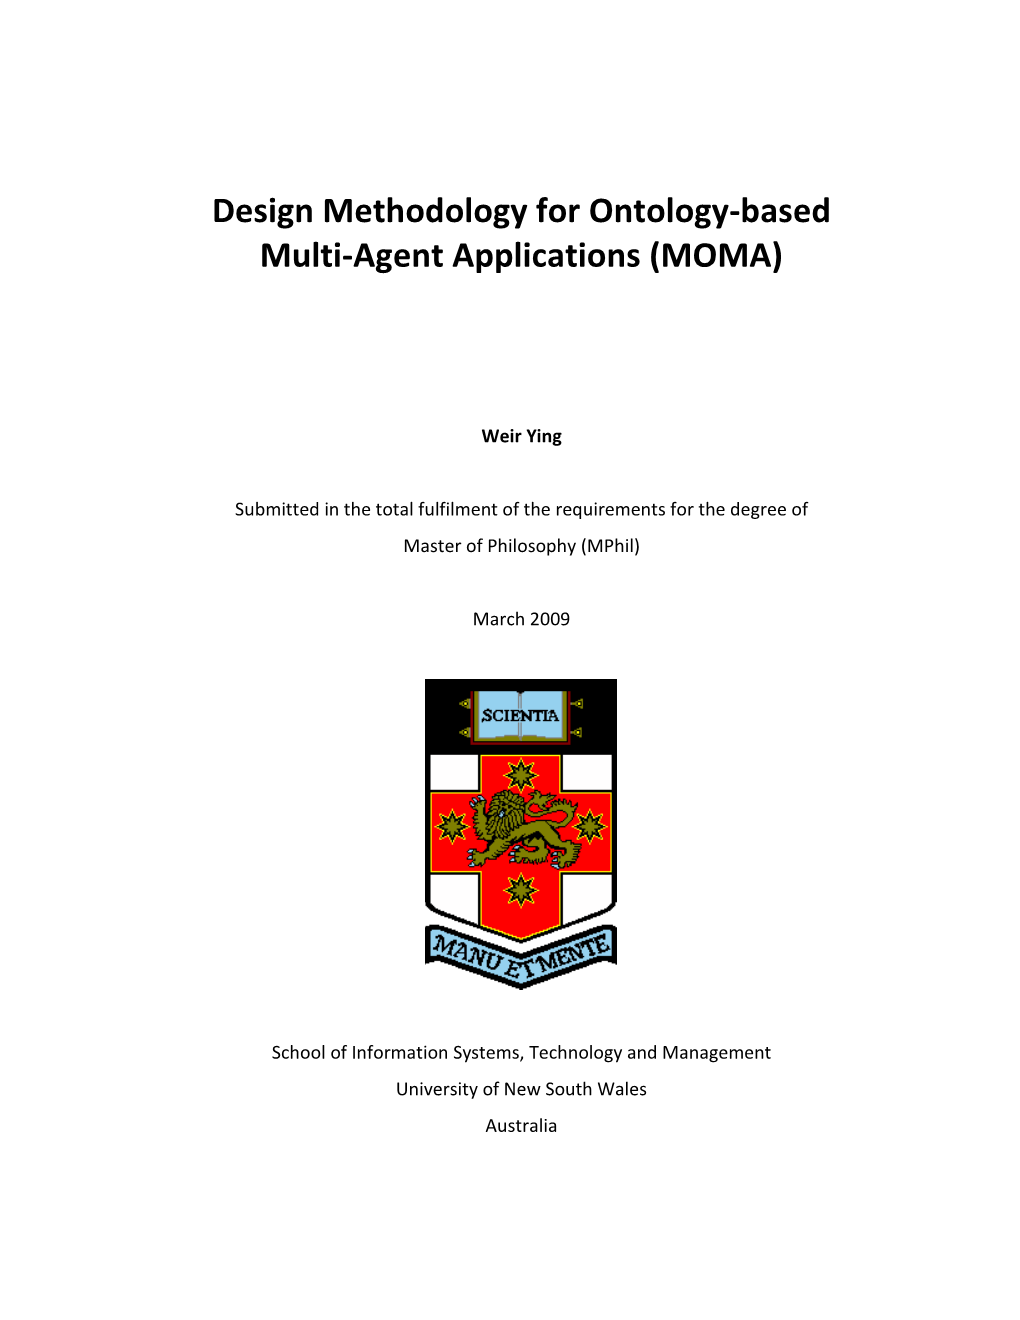 Design Methodology for Ontology-Based Multi-Agent Applications (MOMA)